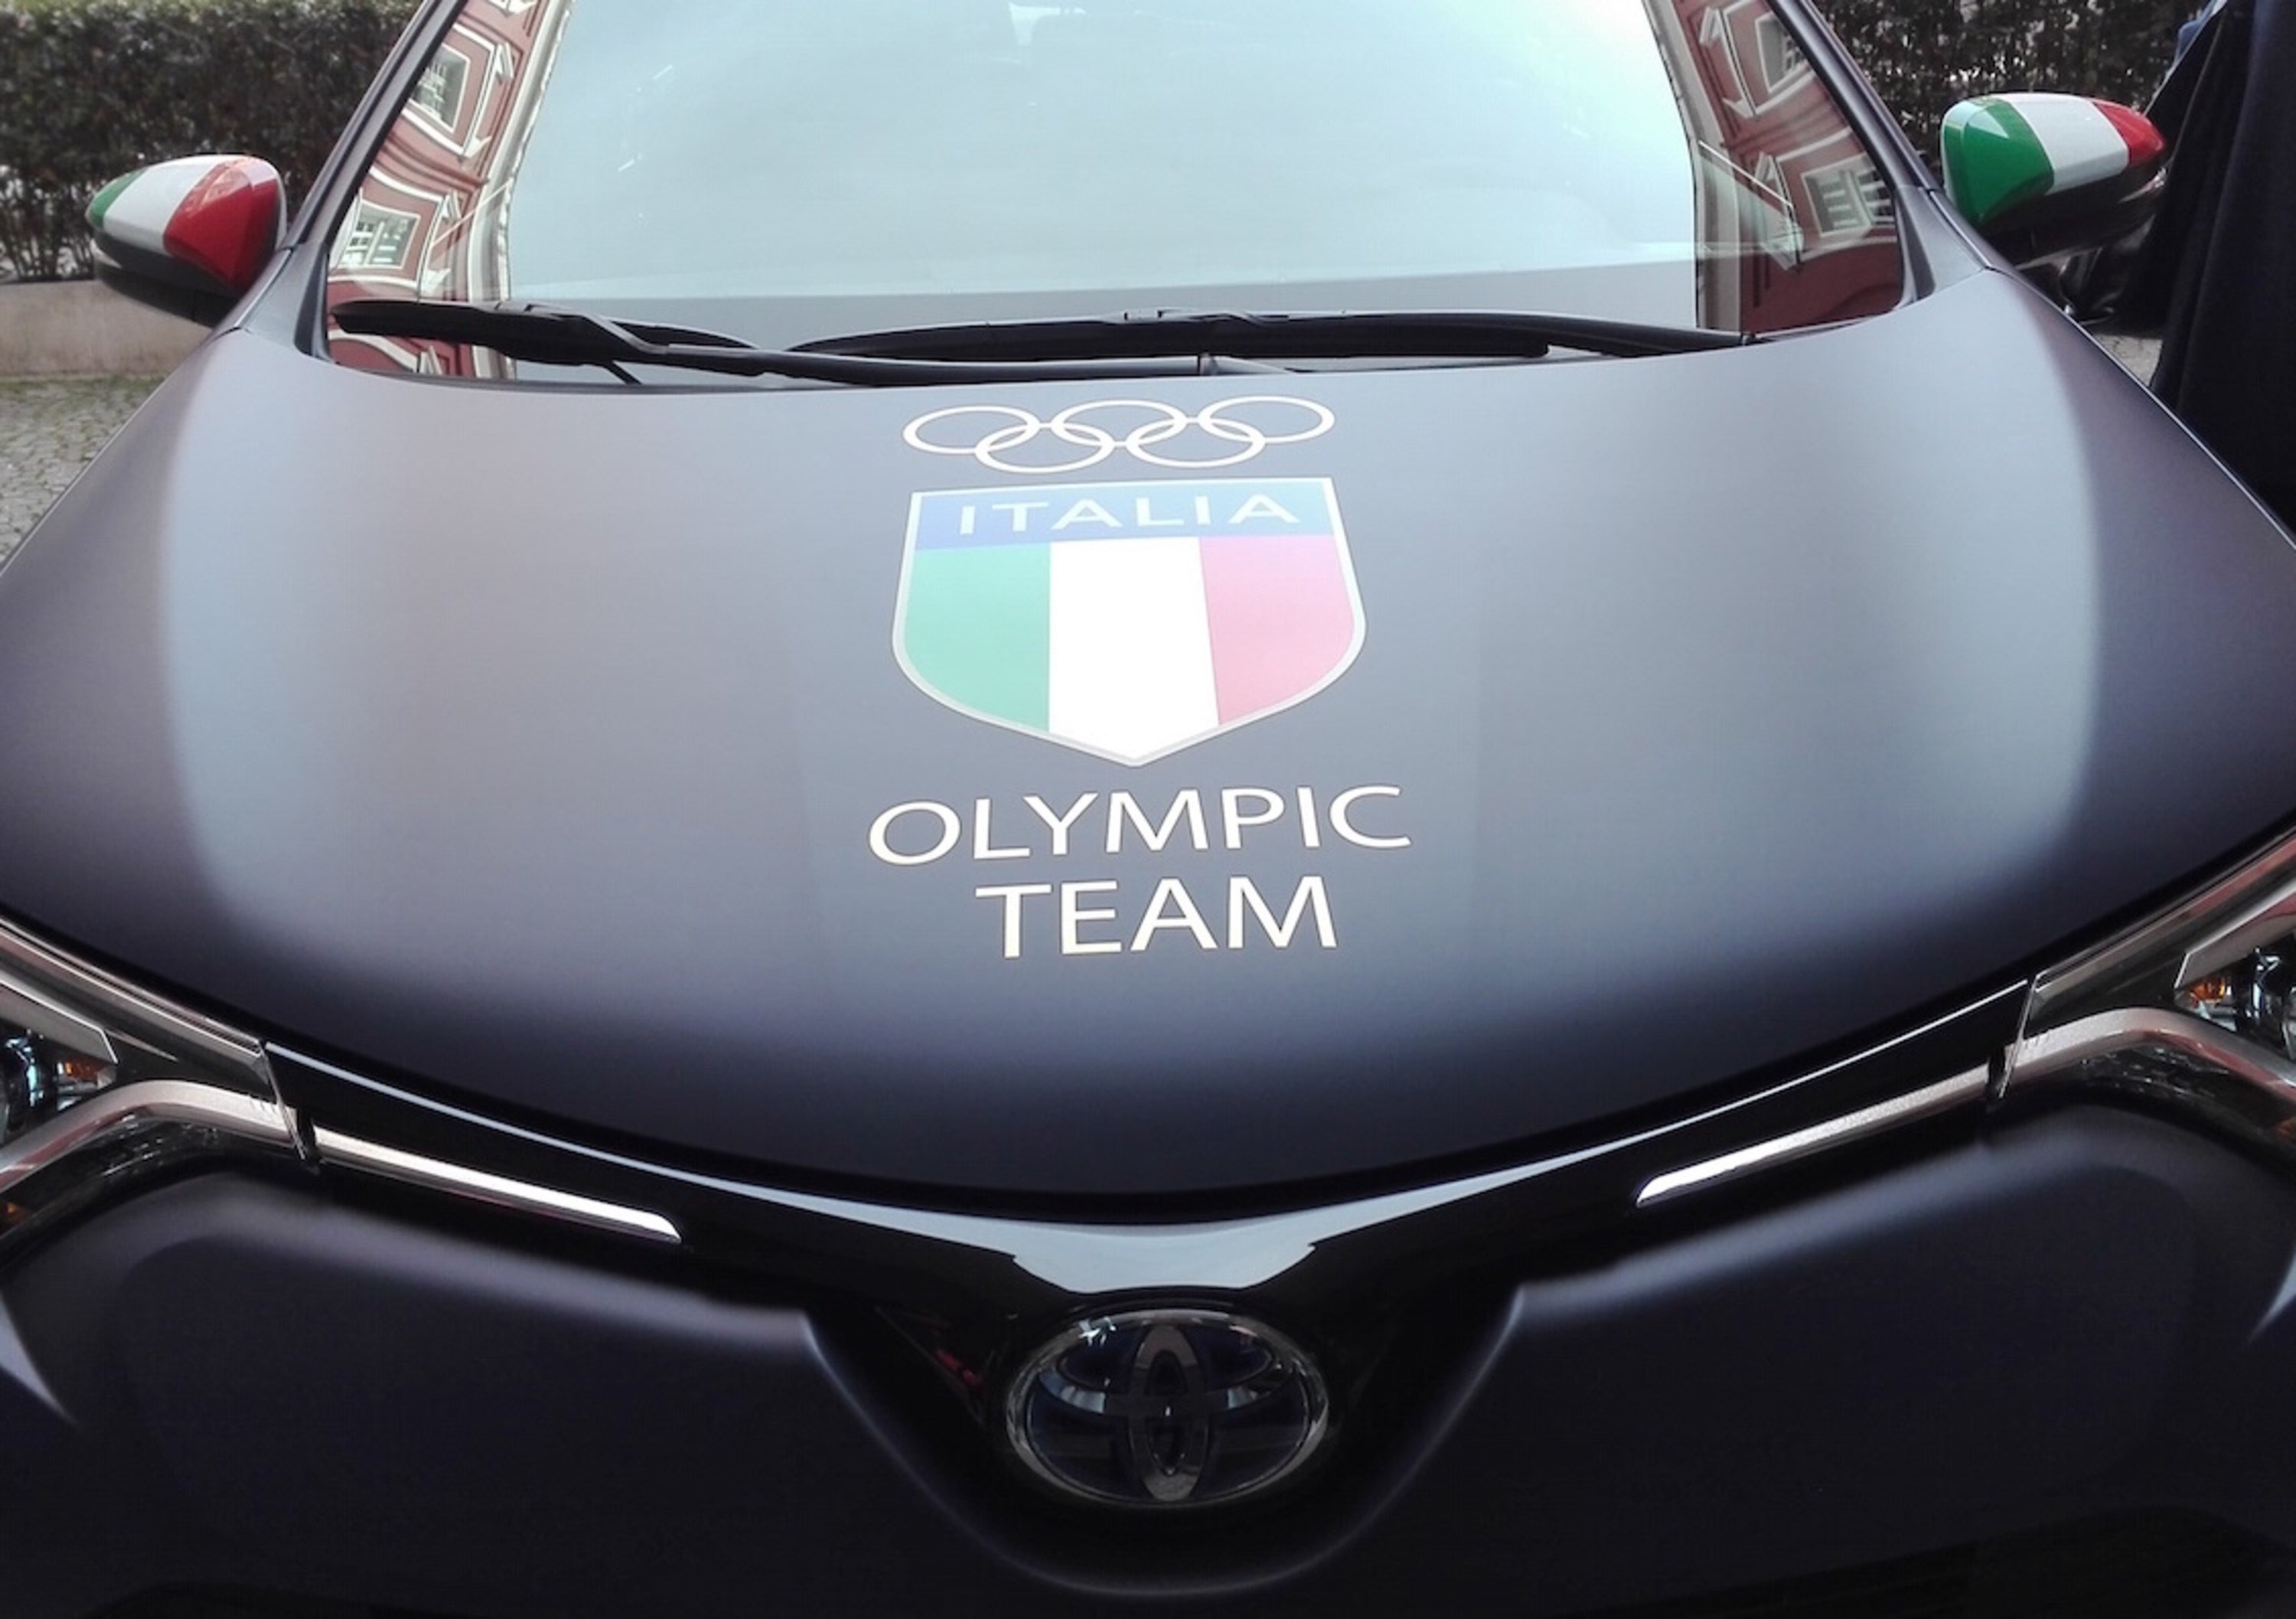 Toyota e Coni, insieme alle Olimpiadi